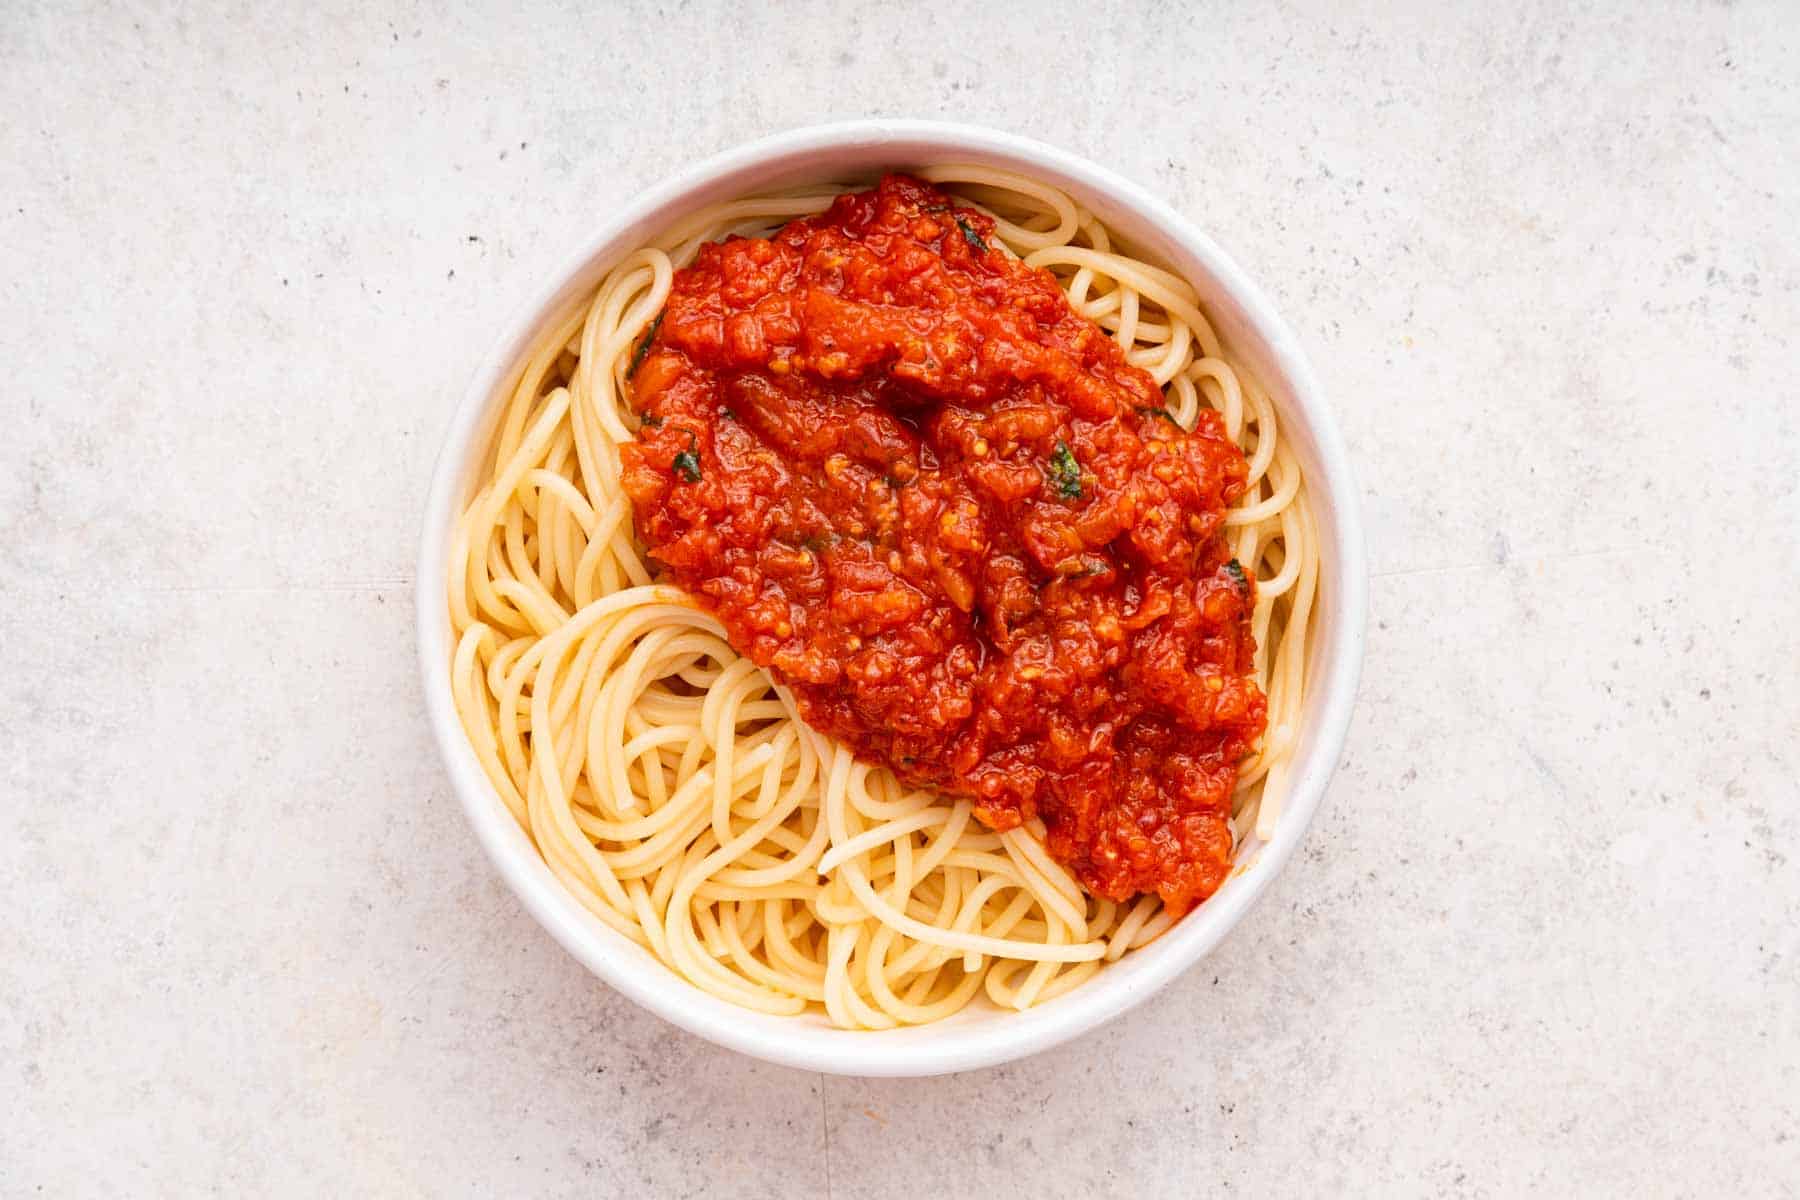 White bowl of spaghetti noodles with tomato sauce poured on top.